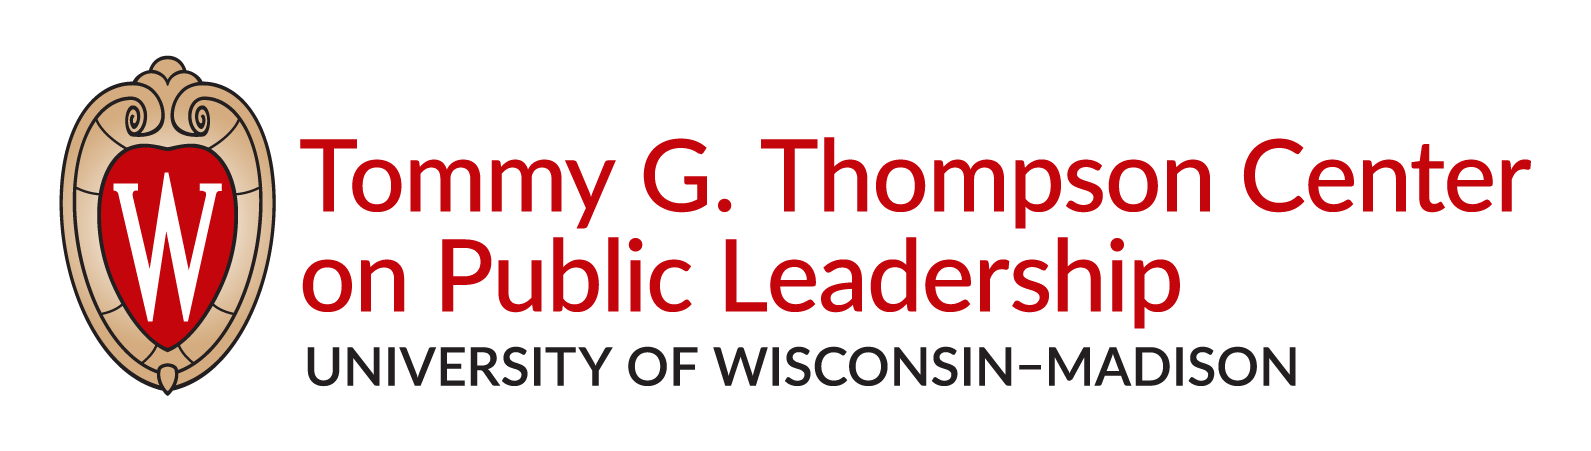 Thompson Center logo